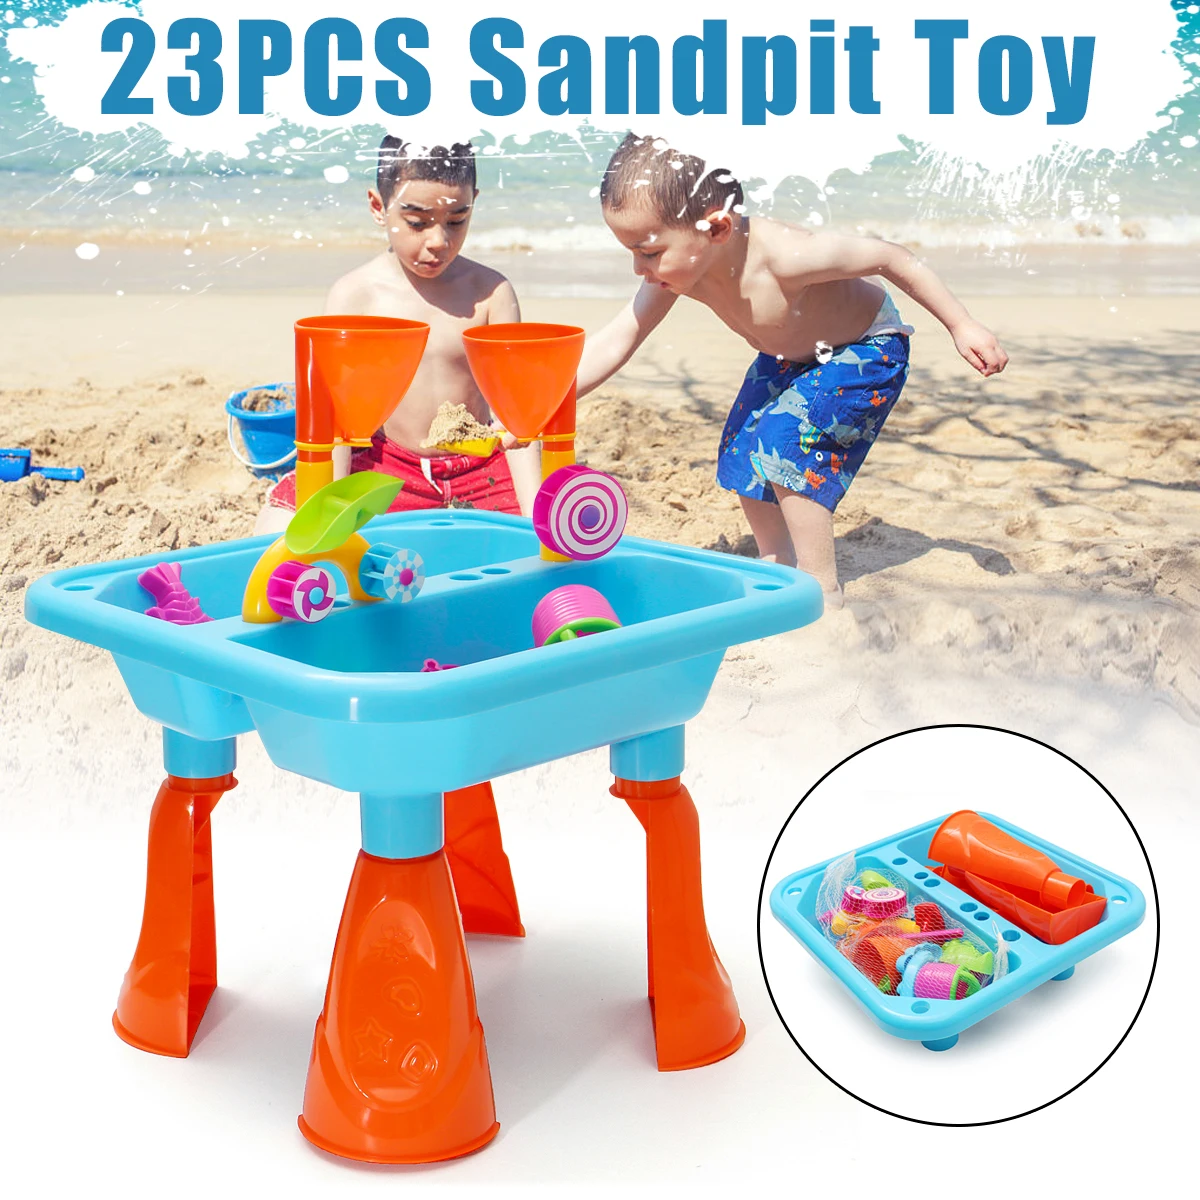 

23pcs/Set Sandpit Toys Non-toxic Plastic Kids Outdoor Sand & Water Children Activity Play Table Sandpit Toy Set Multi-Coloured